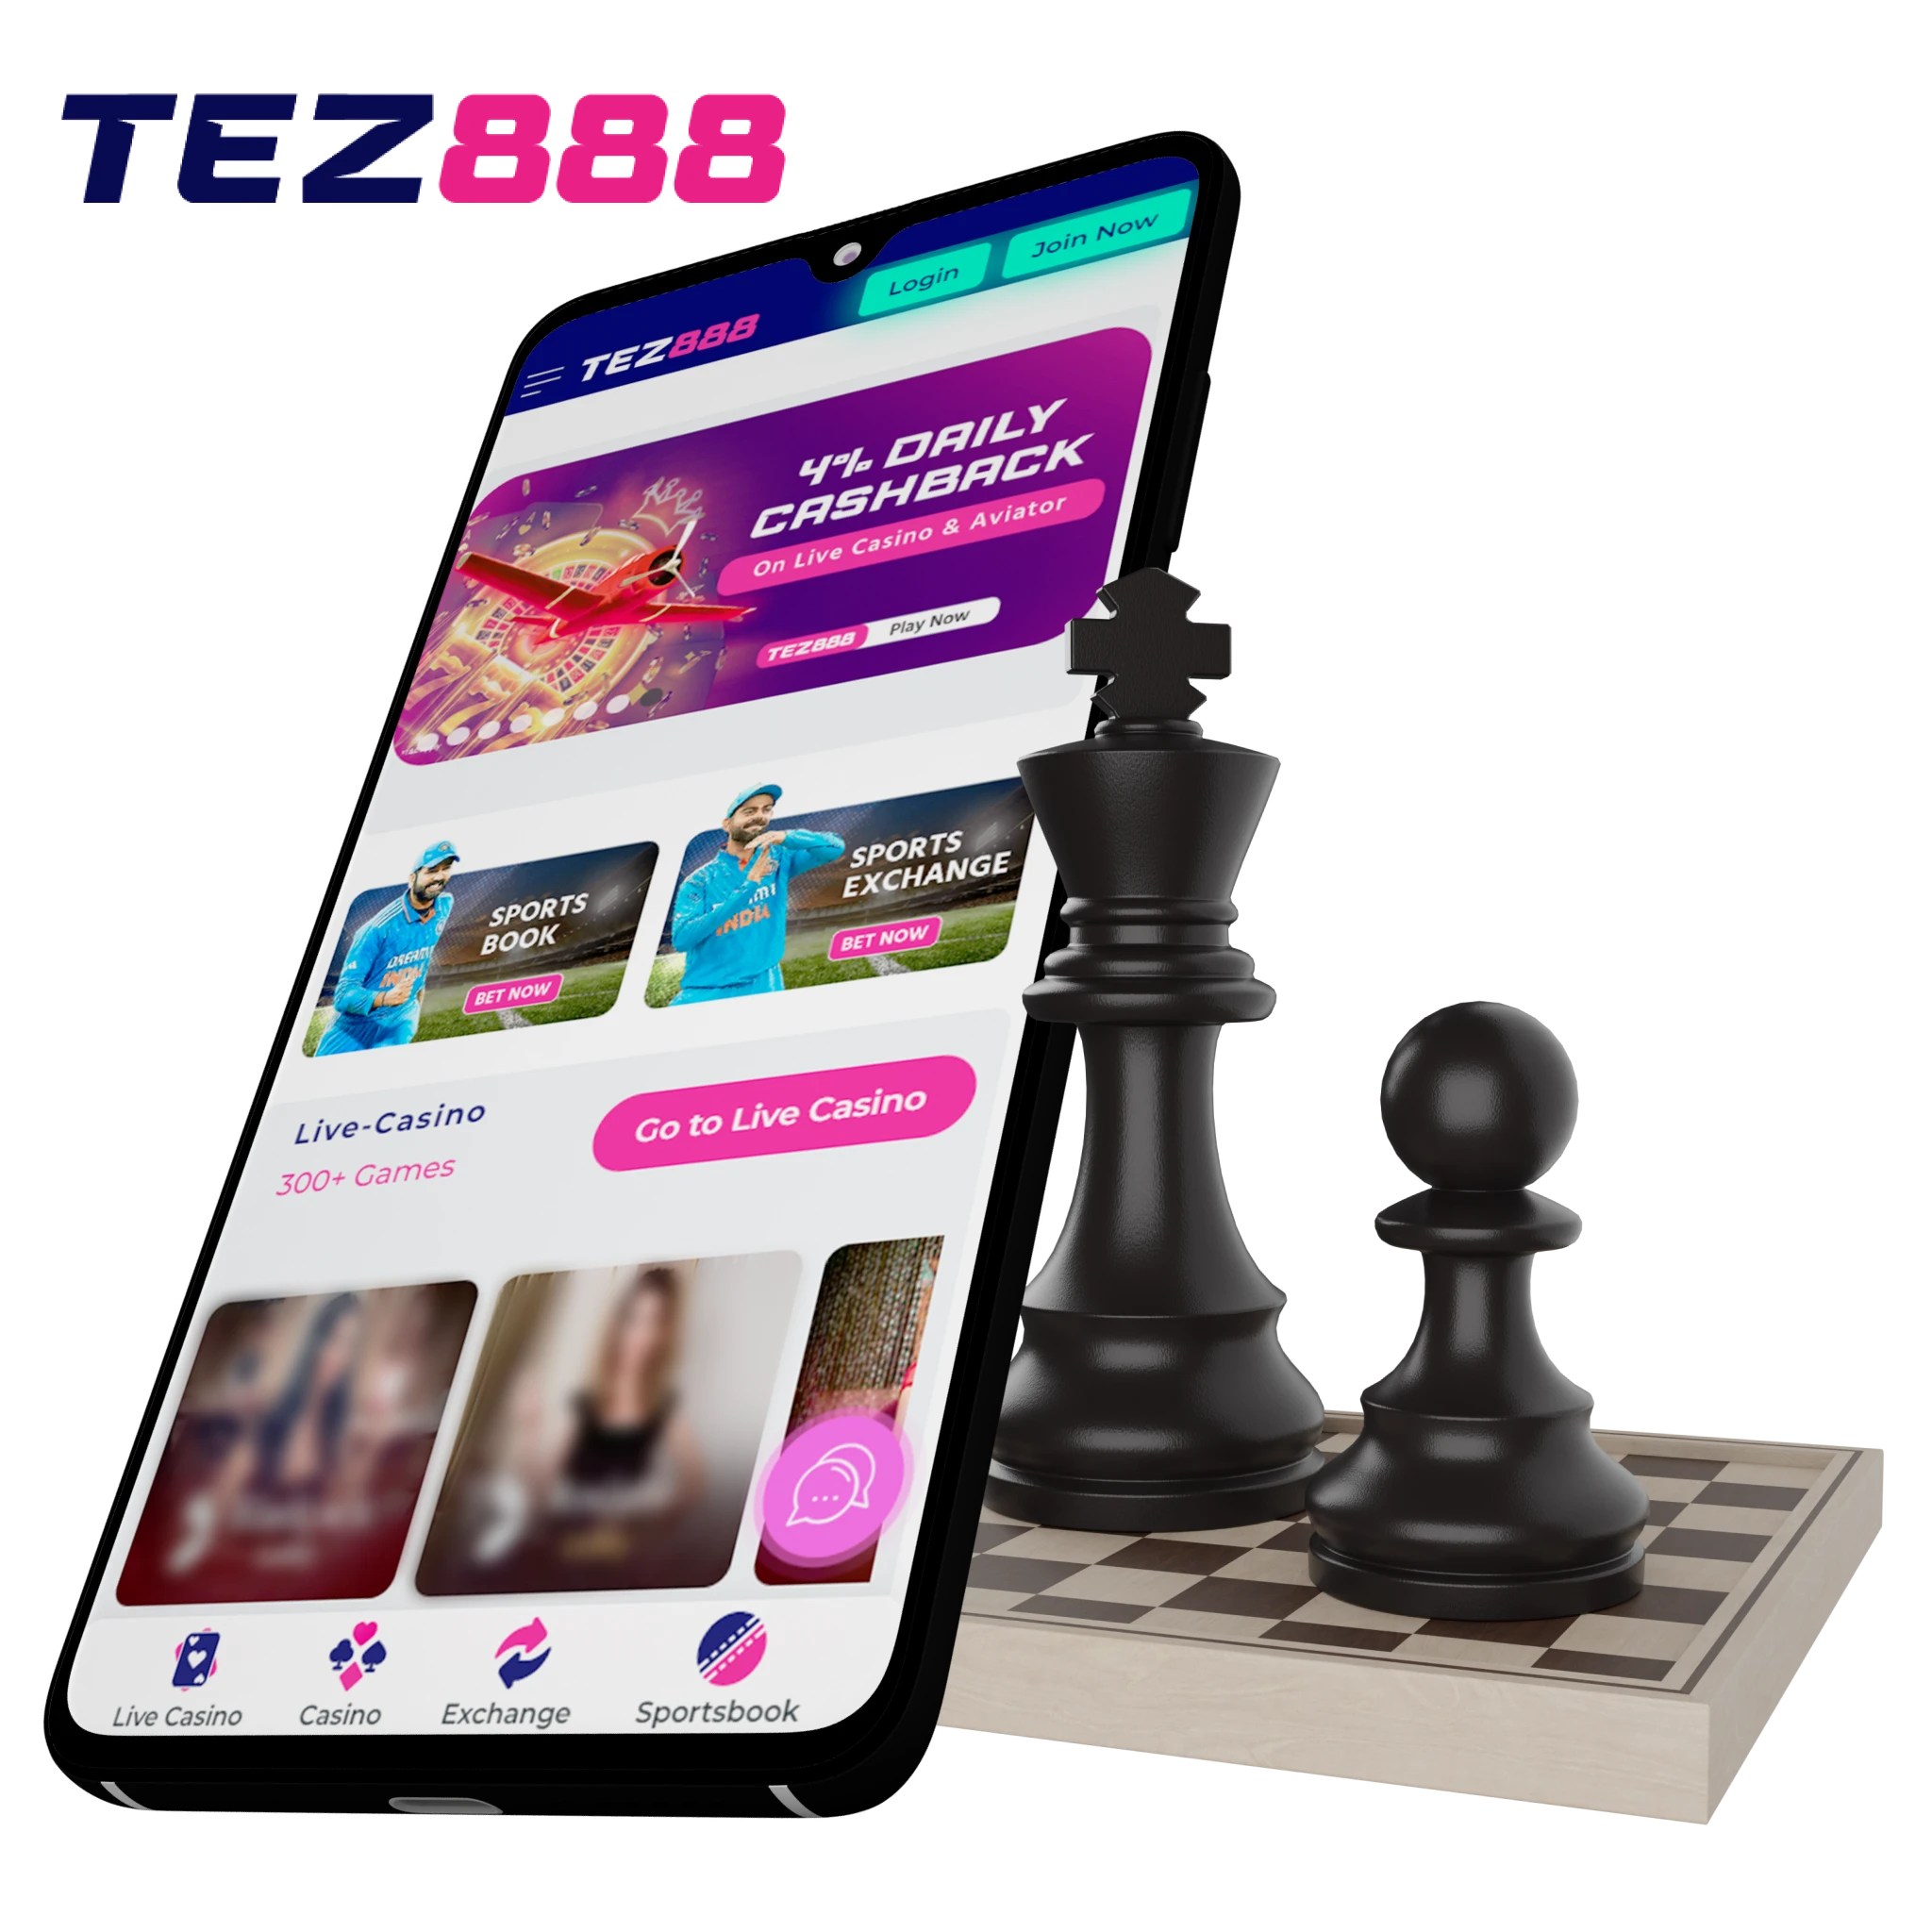 Tez888 app offers a comprehensive and rewarding platform for chess devotees.